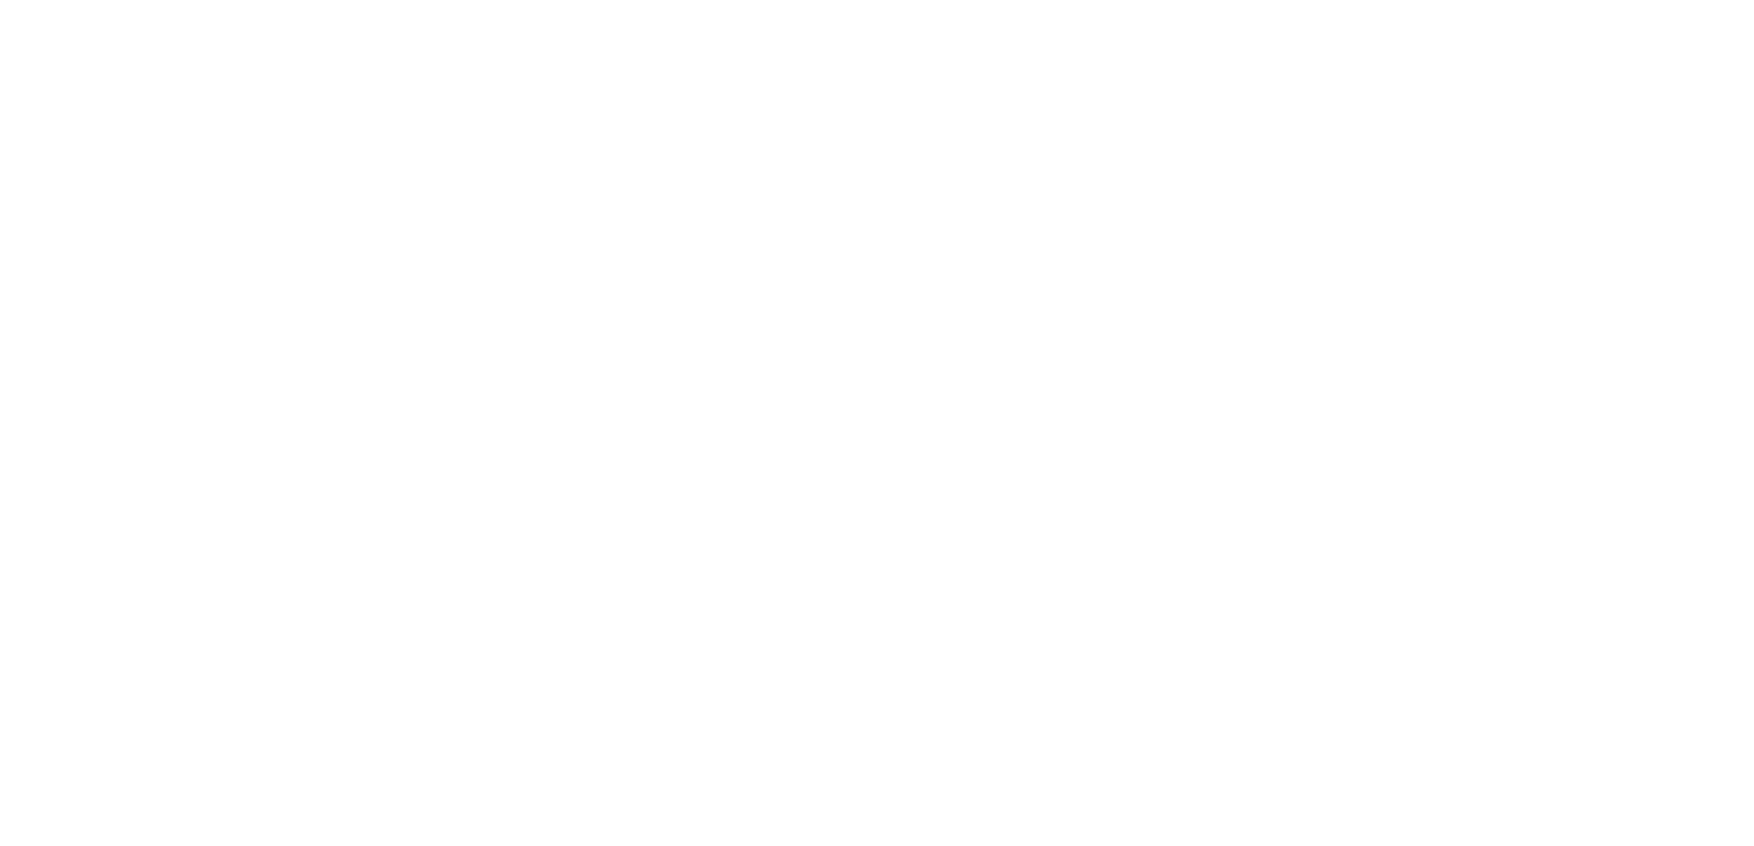 Libertine Parfumerie logo